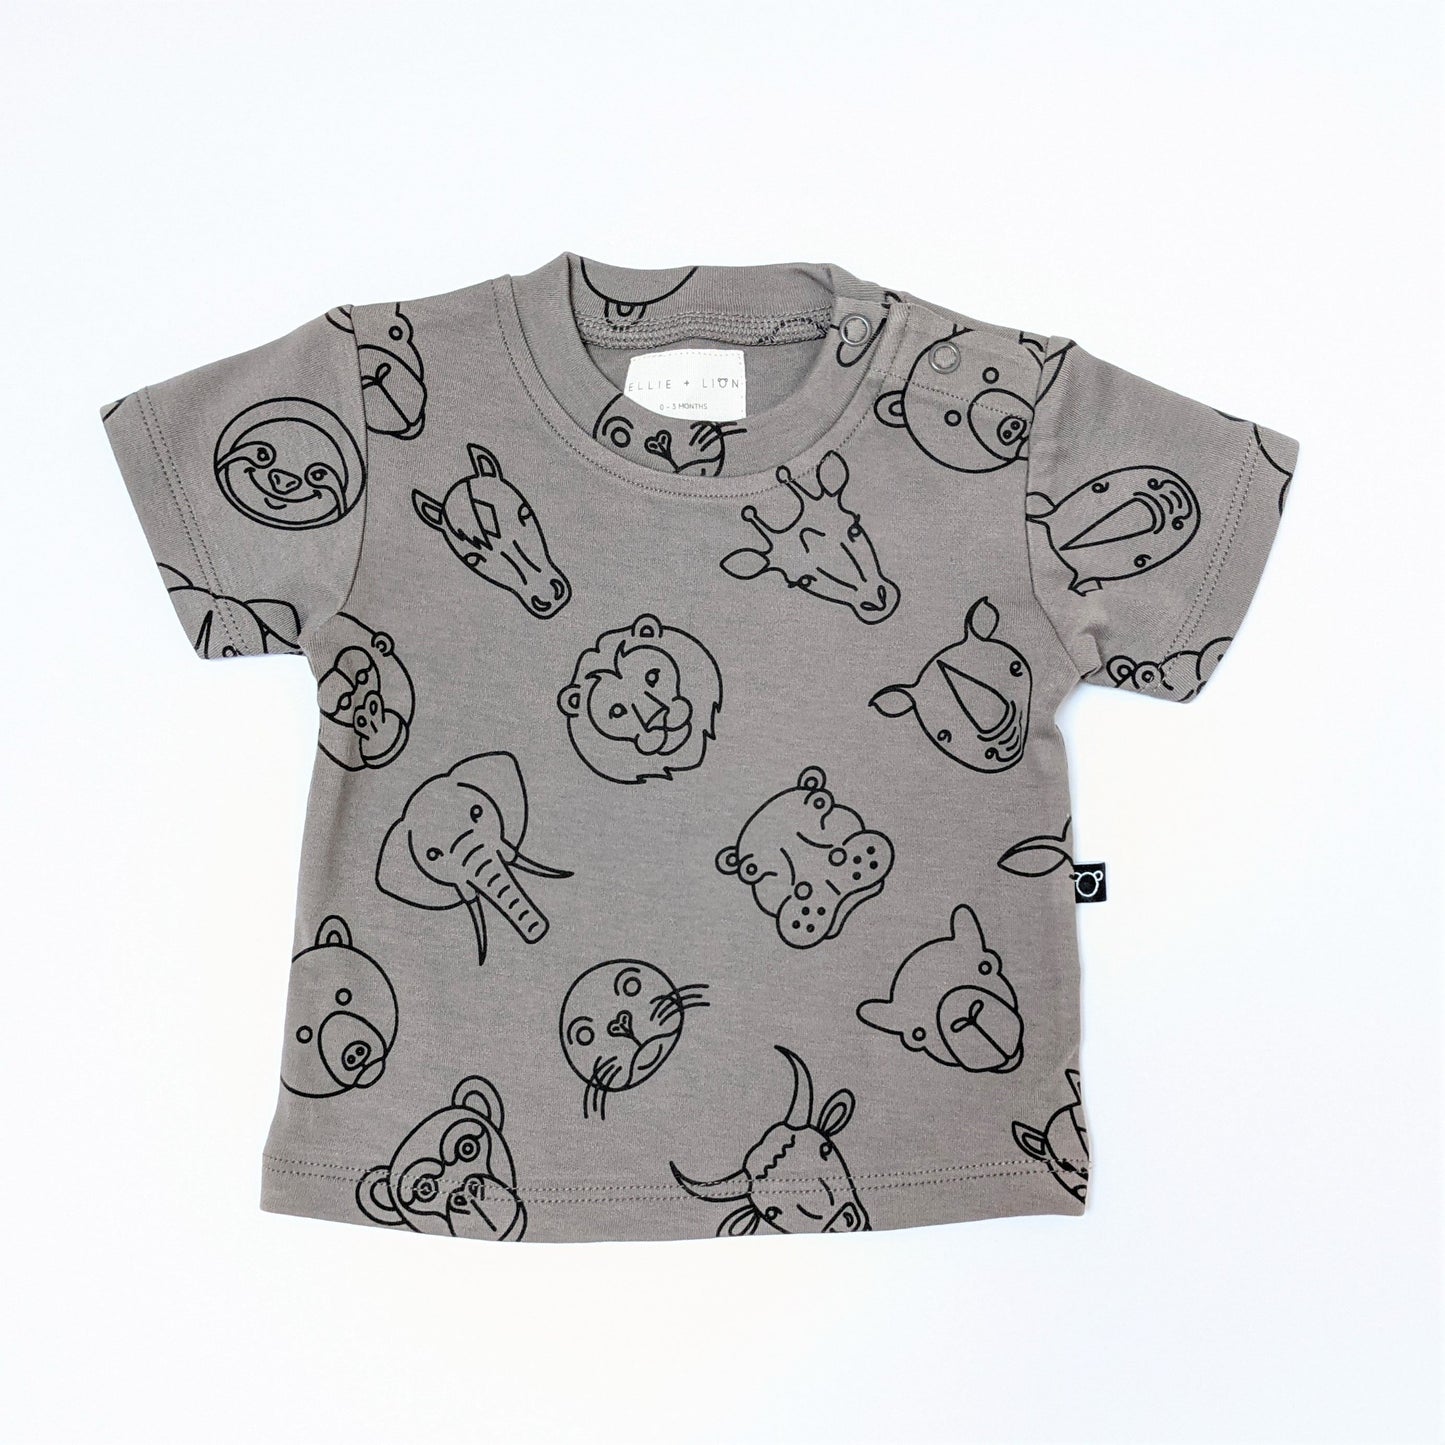 Grey animal print baby t-shirt